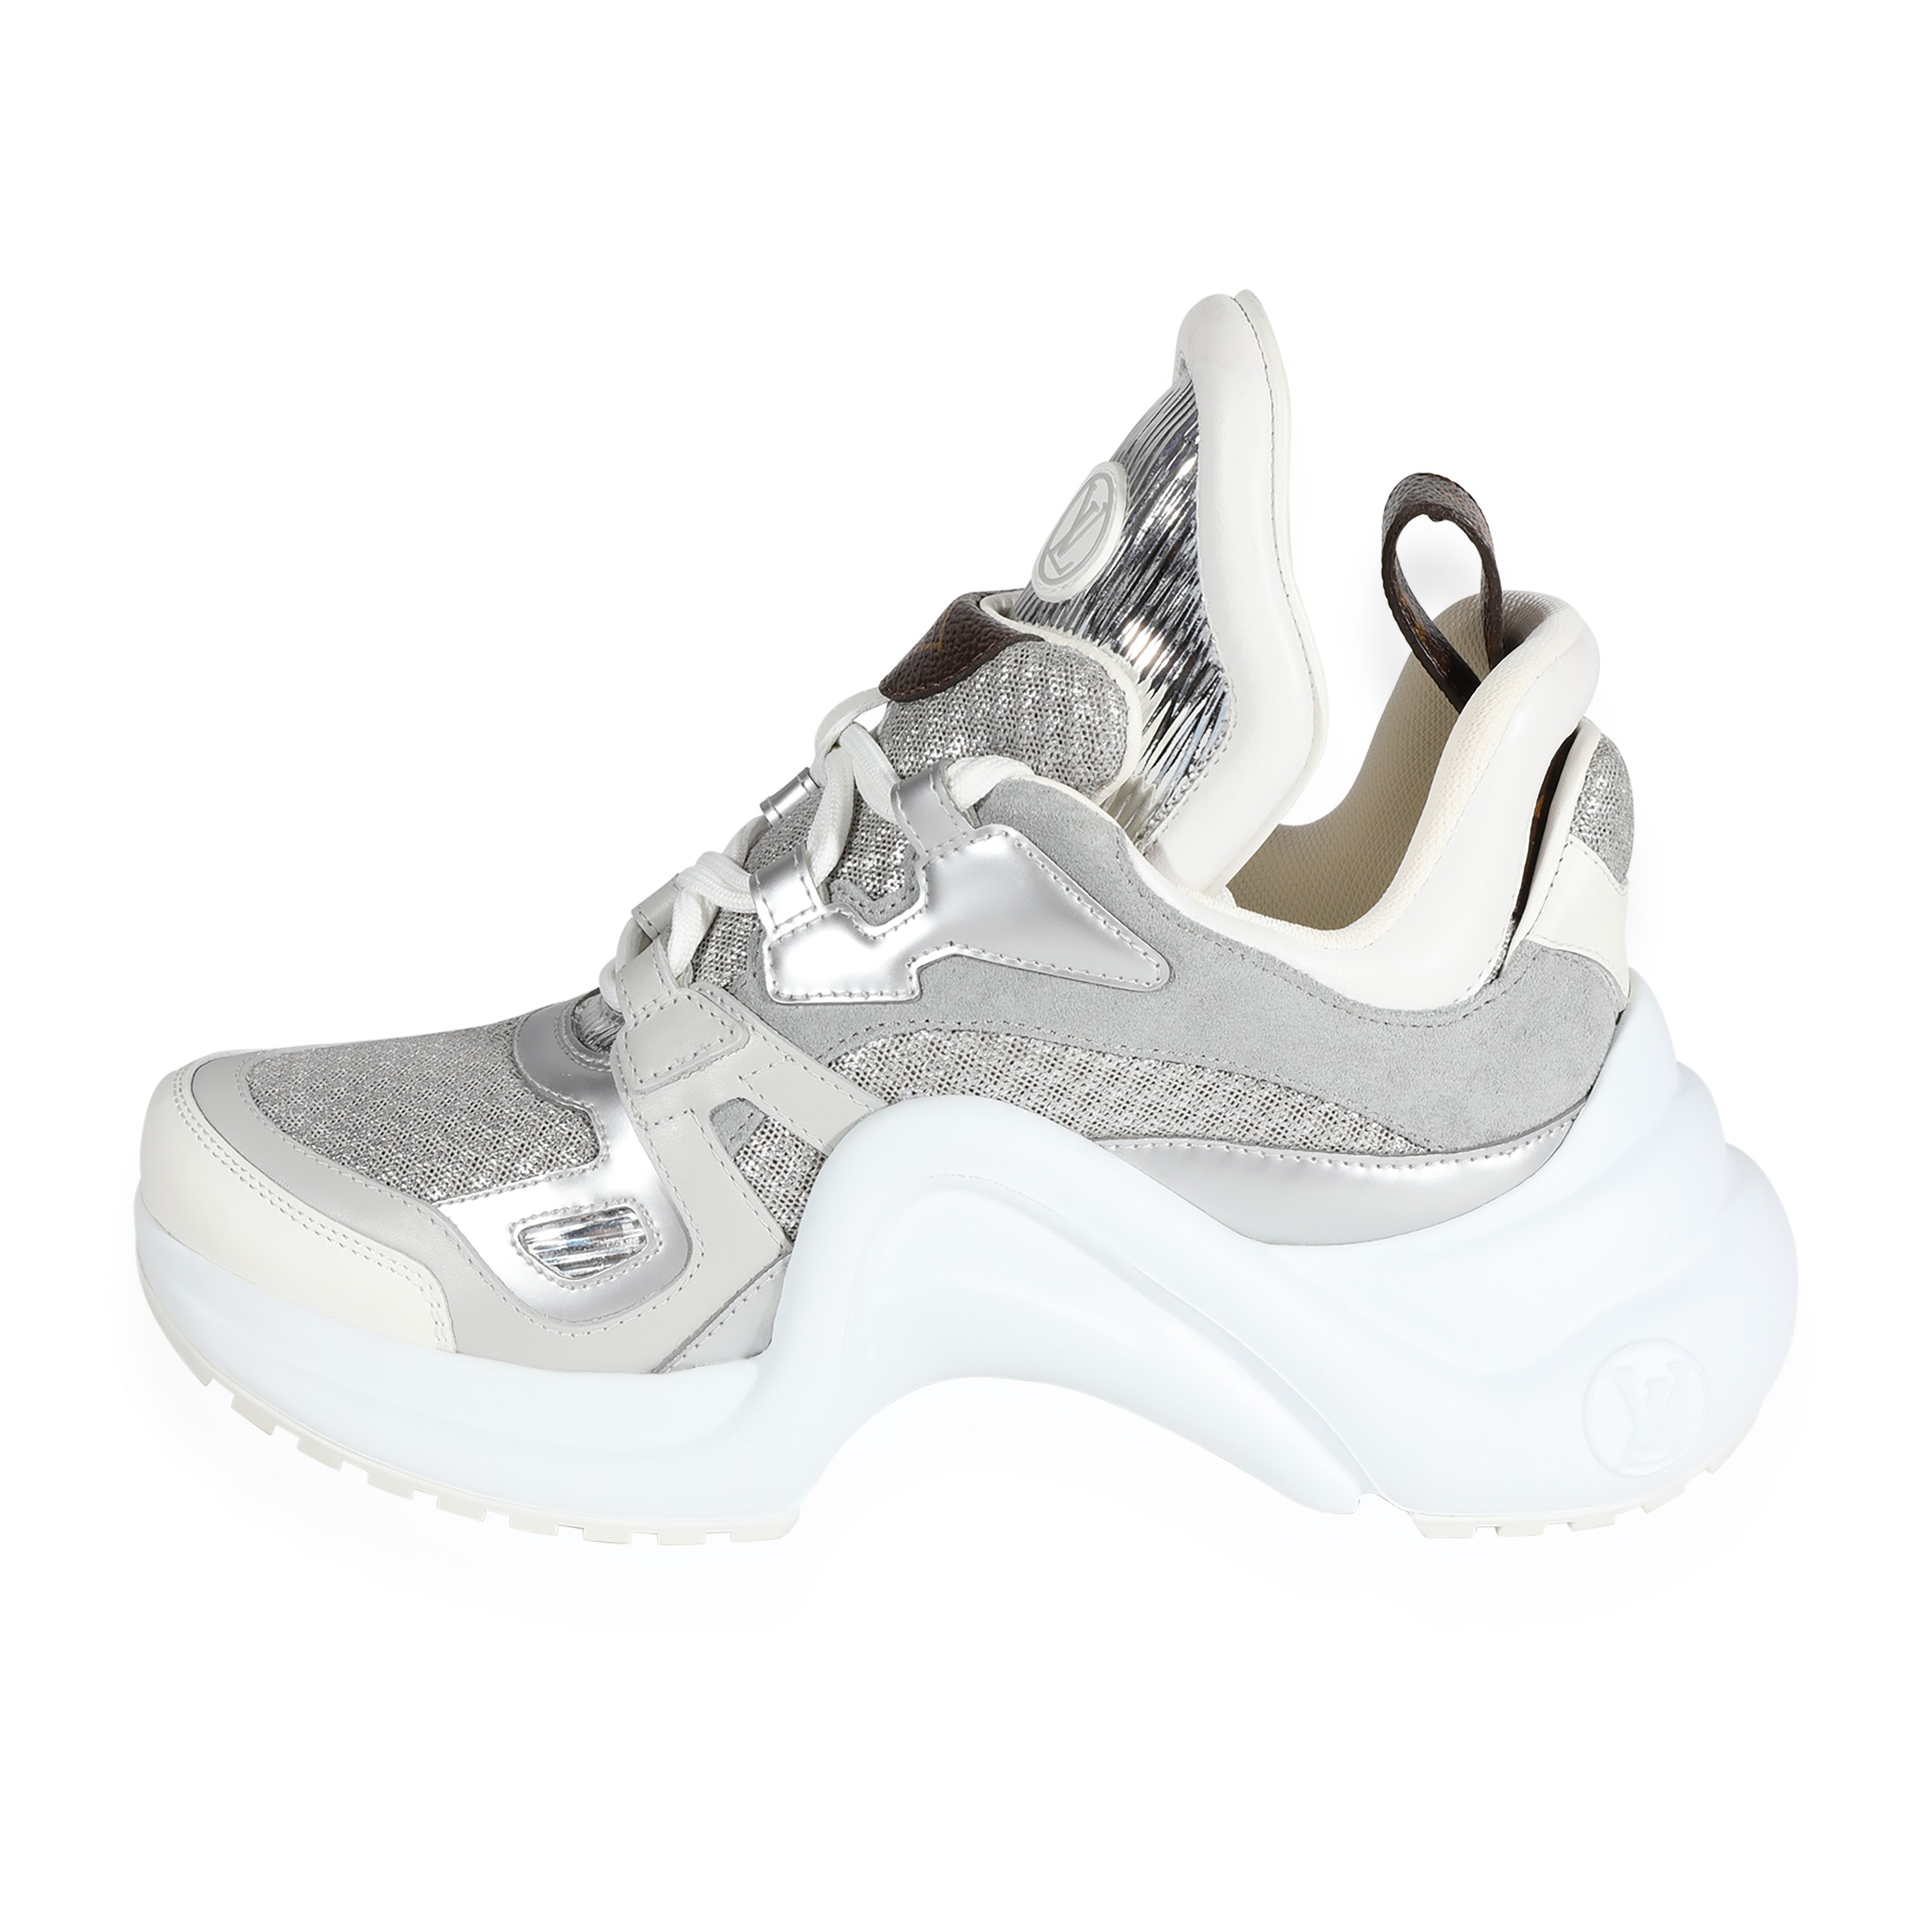 Louis Vuitton Wmns Archlight Sneaker 'Metallic Silver